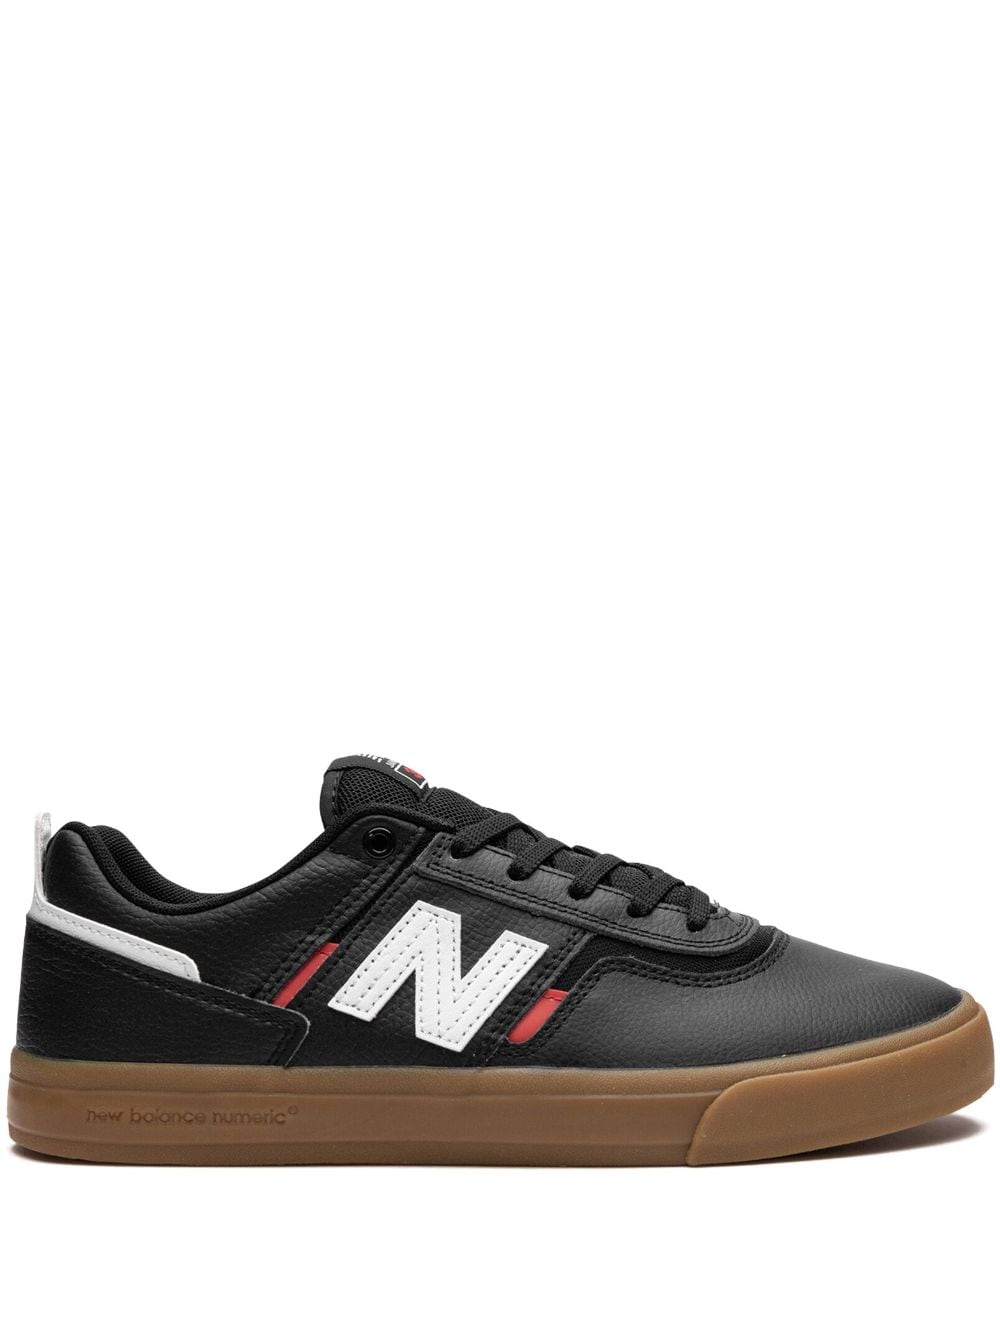 New Balance Numeric 306 "Black/Gum" sneakers